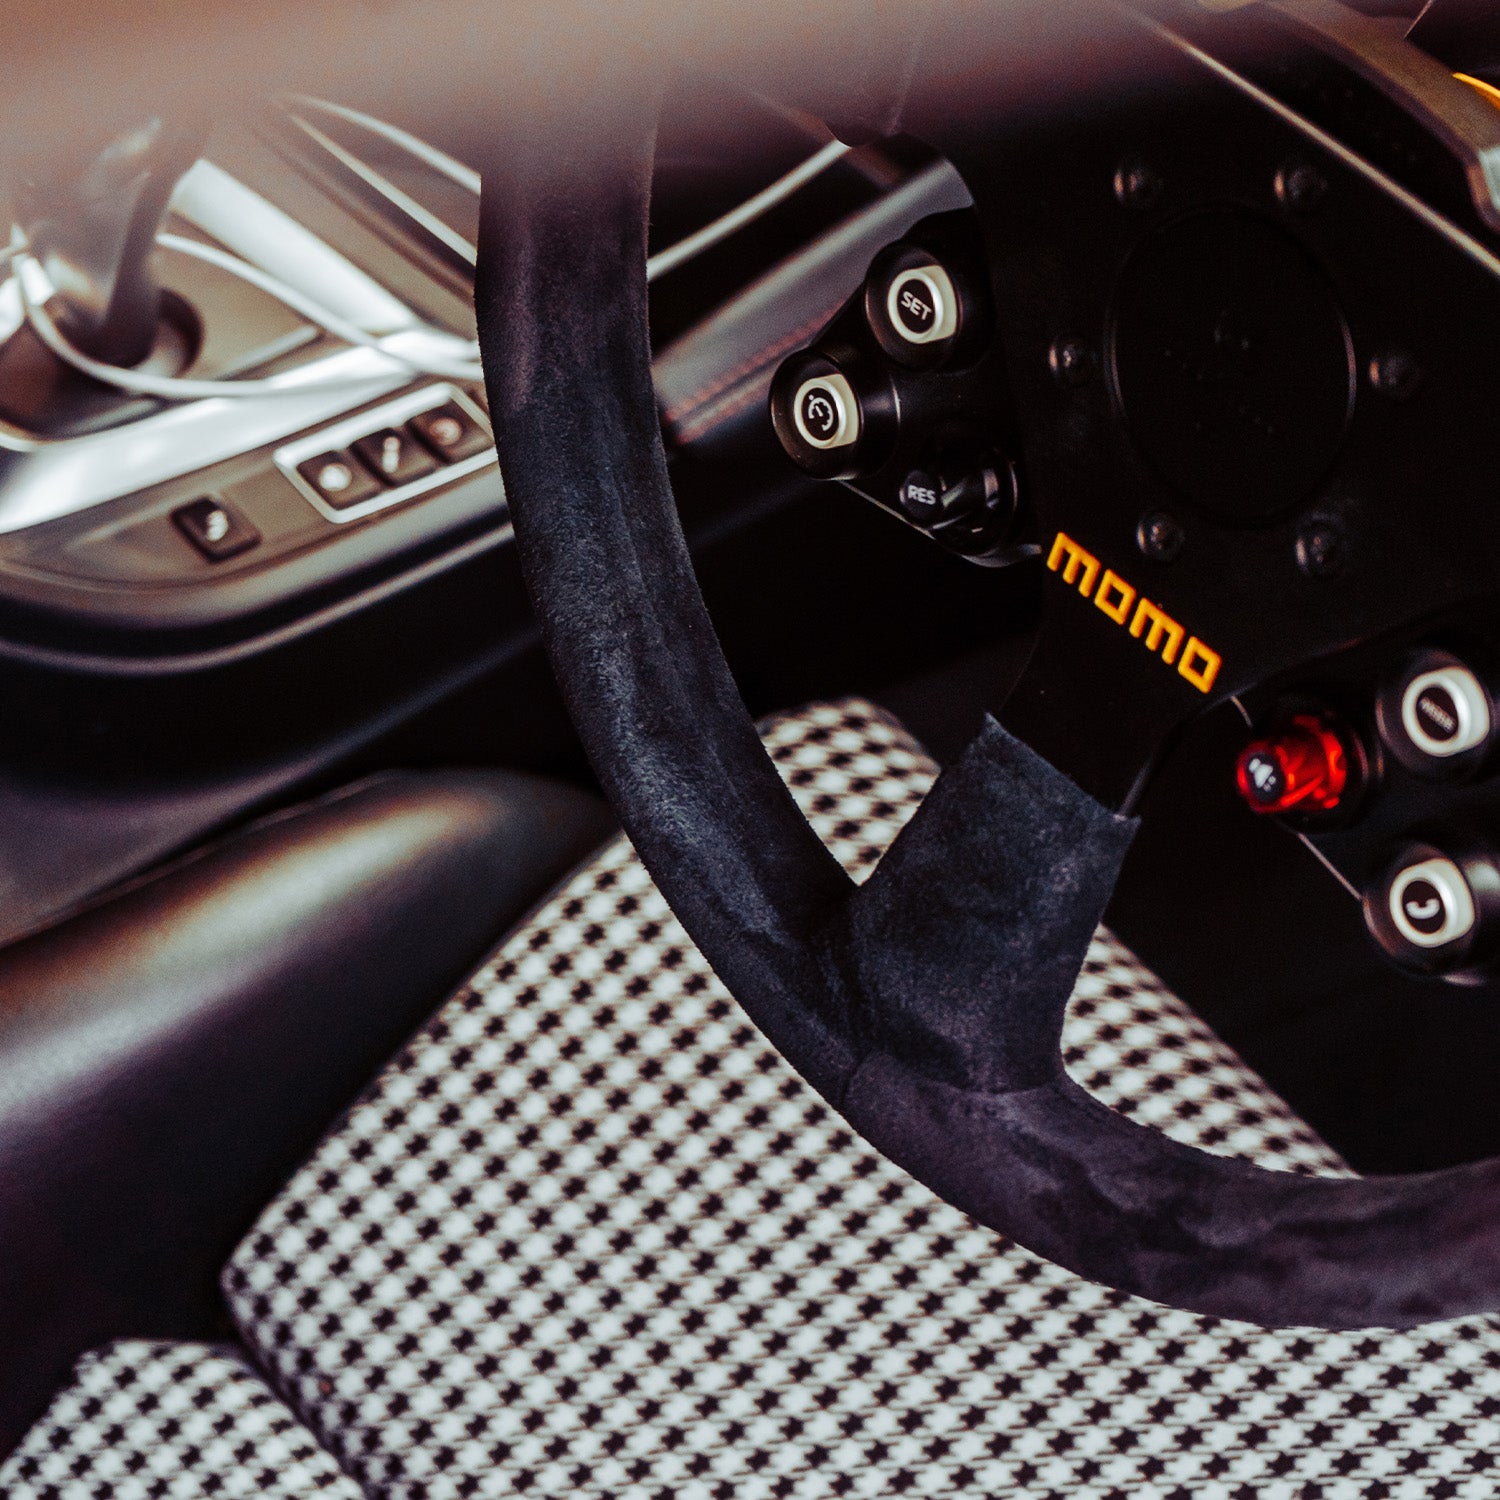 JQ Werks Madtrace® BMW F Series Racing Steering Wheel System